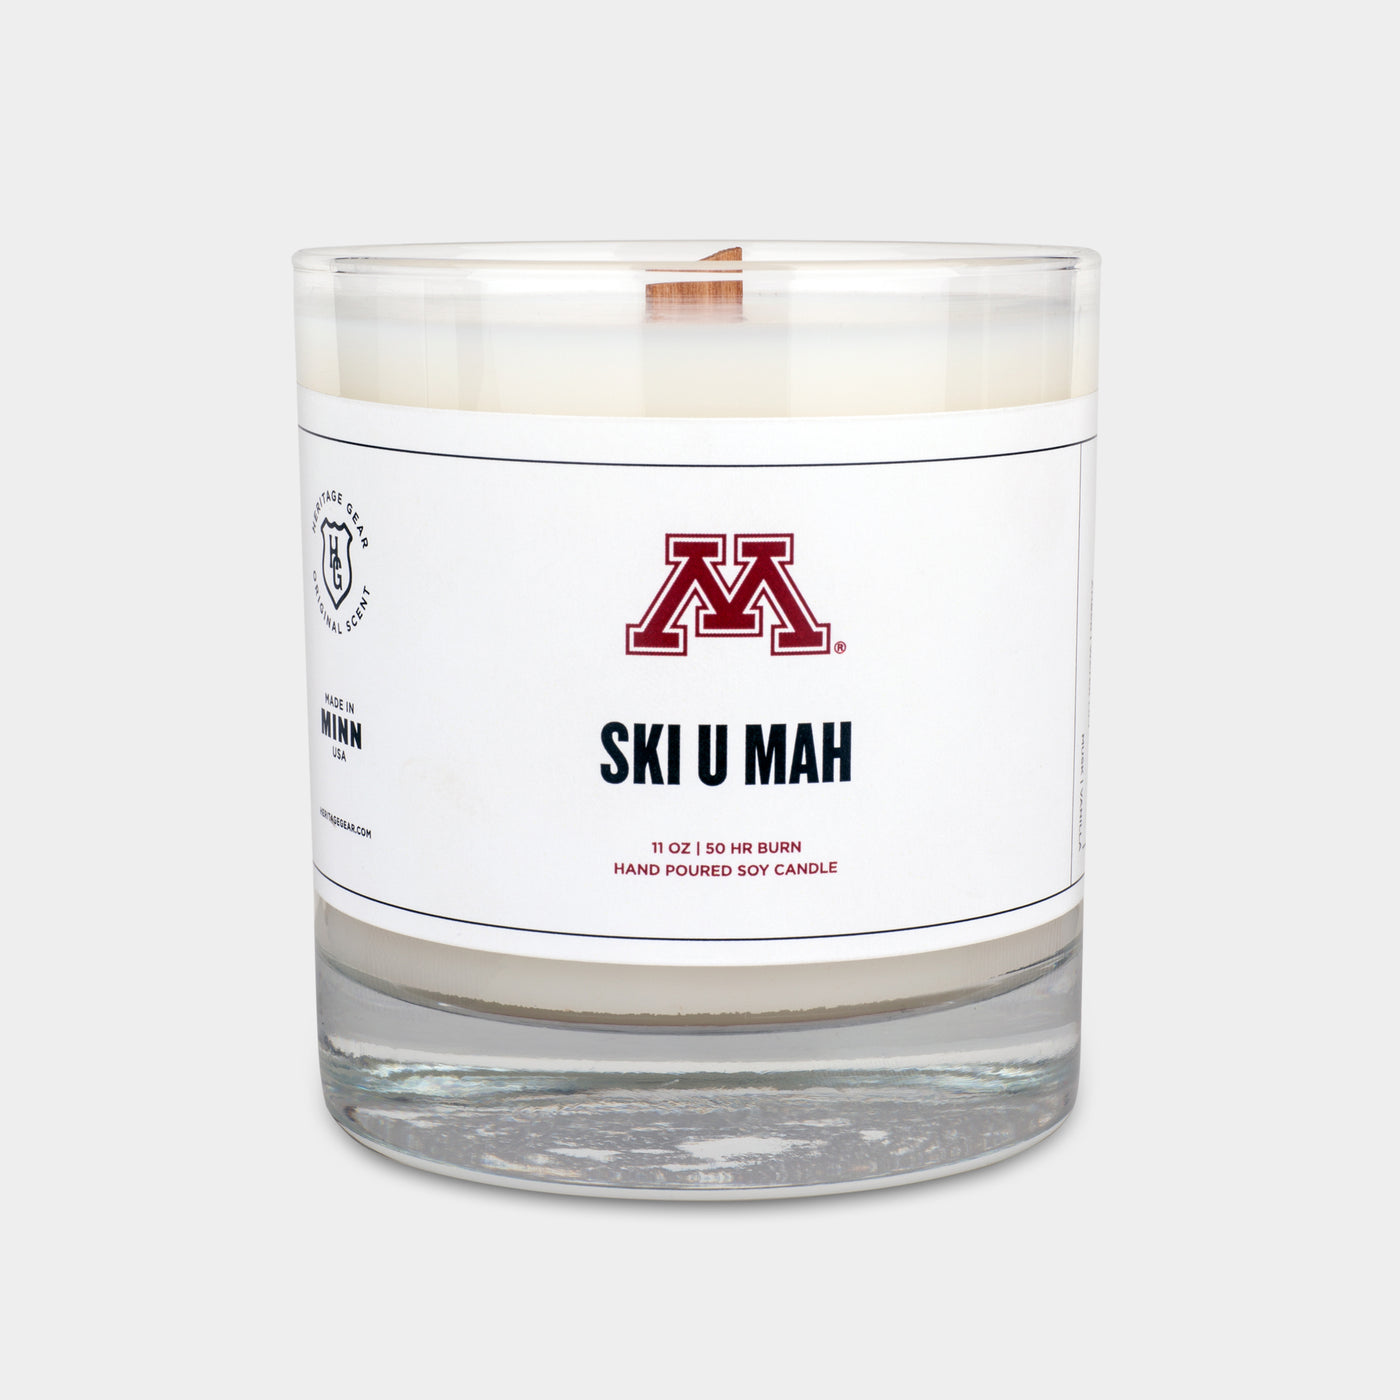 University of Minnesota "Ski U Mah" Candle